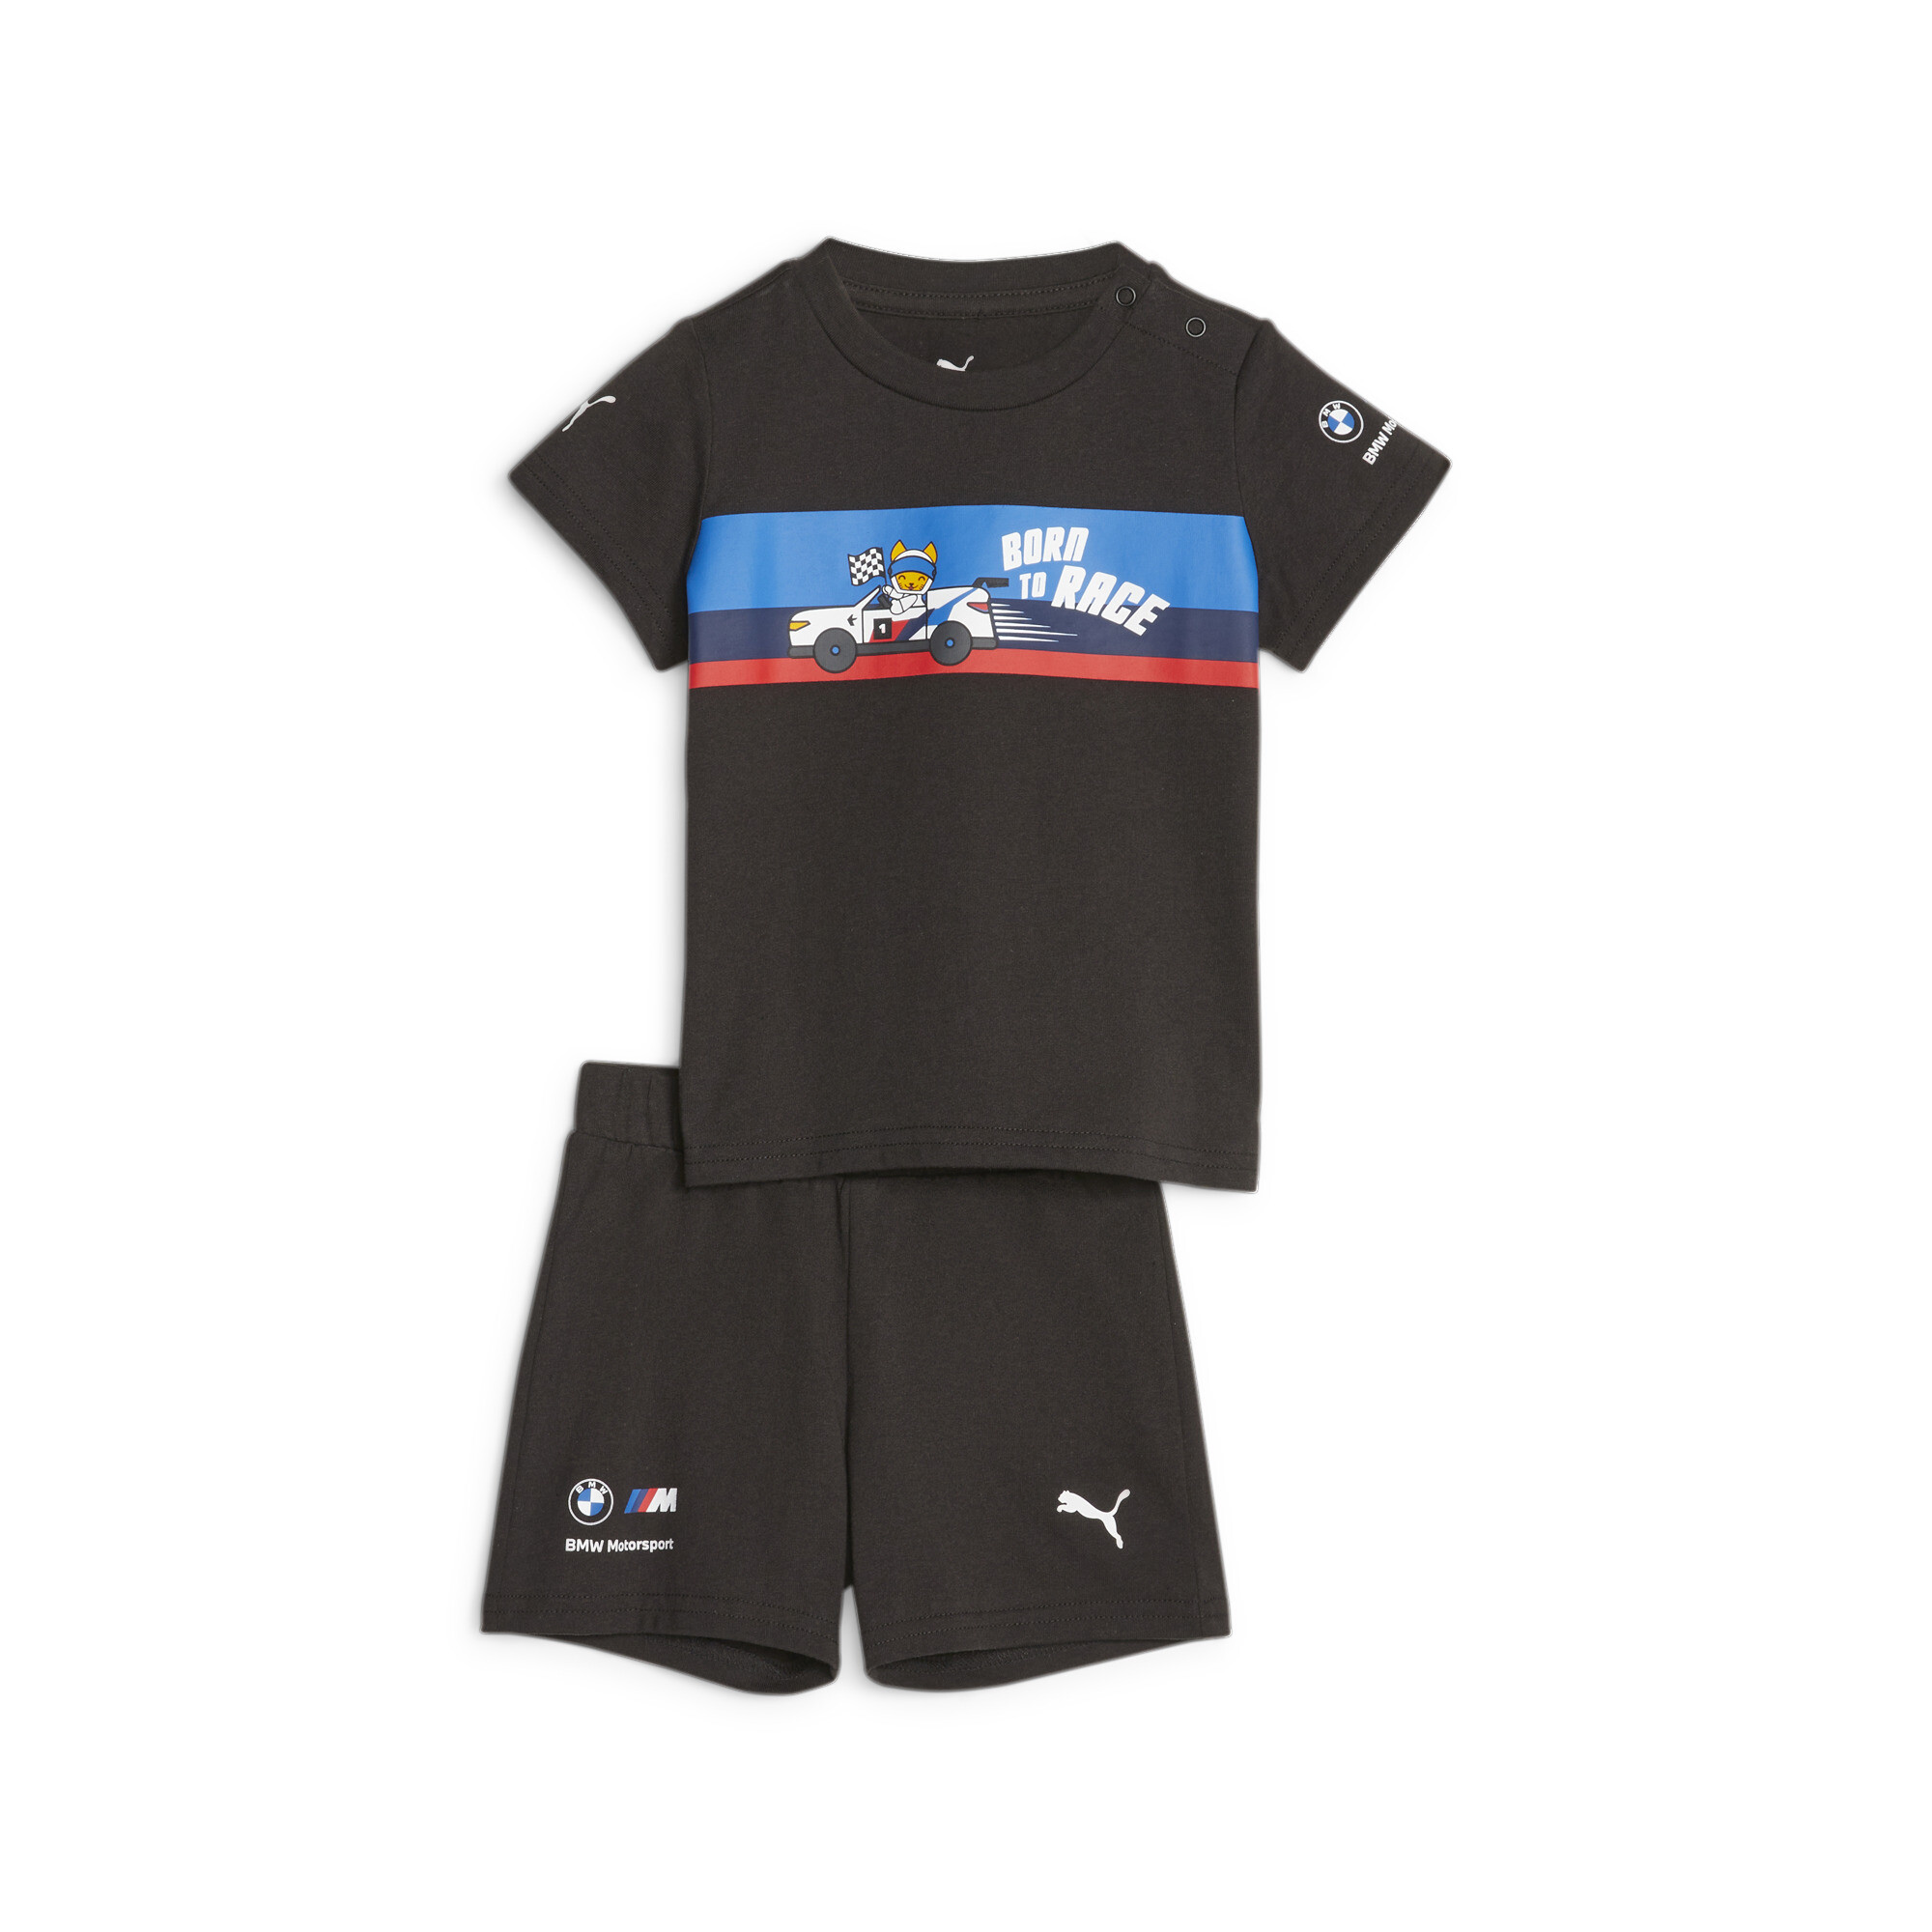 Puma BMW M Motorsport Toddlers' SET, Black, Size 1-2Y, Clothing